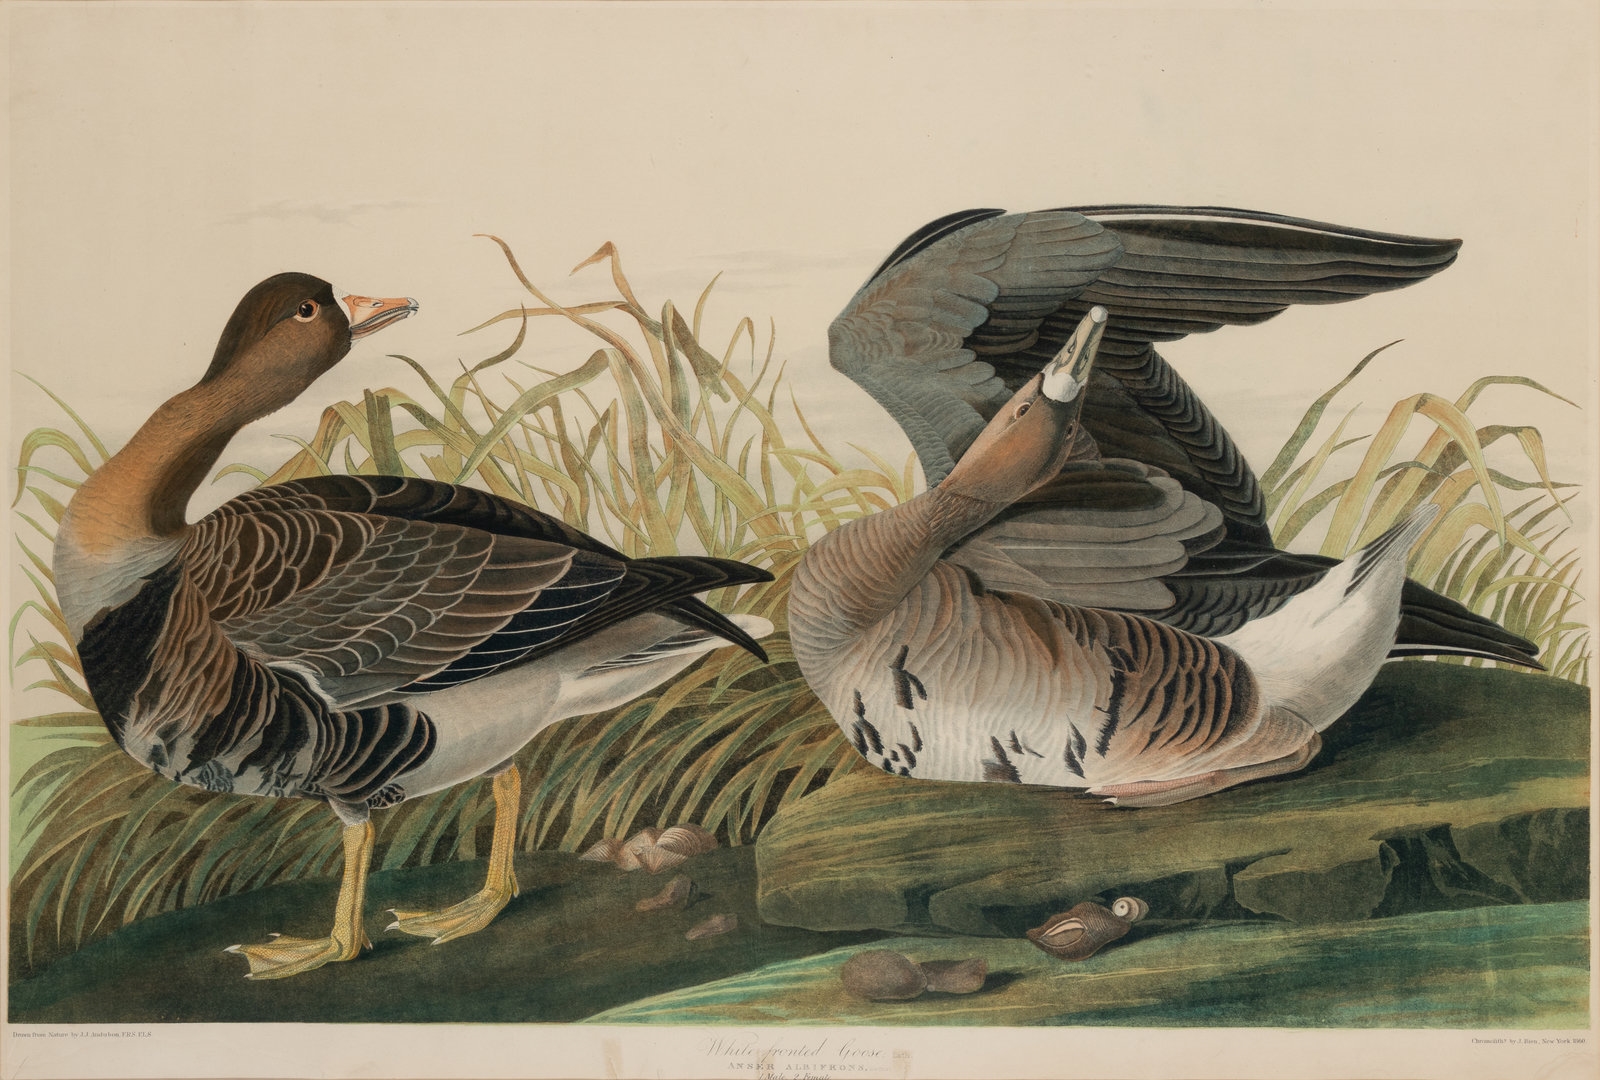 Artwork by John James Audubon, Anser albifrons, Made of Chromolithograph